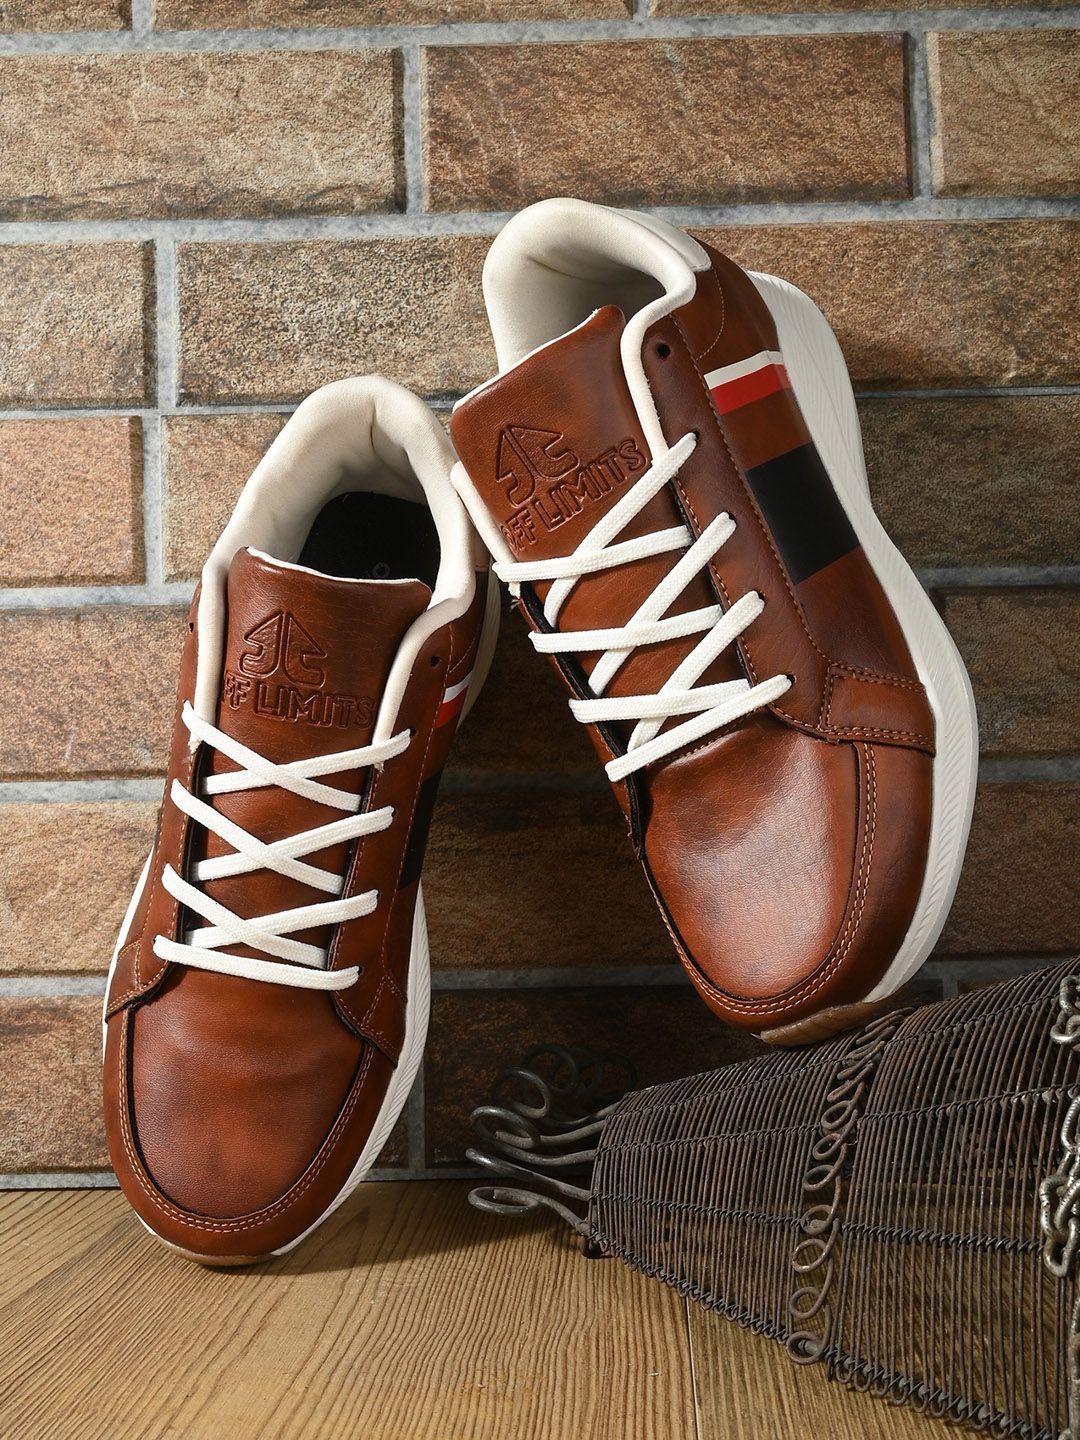 off-limits-men-lightweight-contrast-sole-sneakers